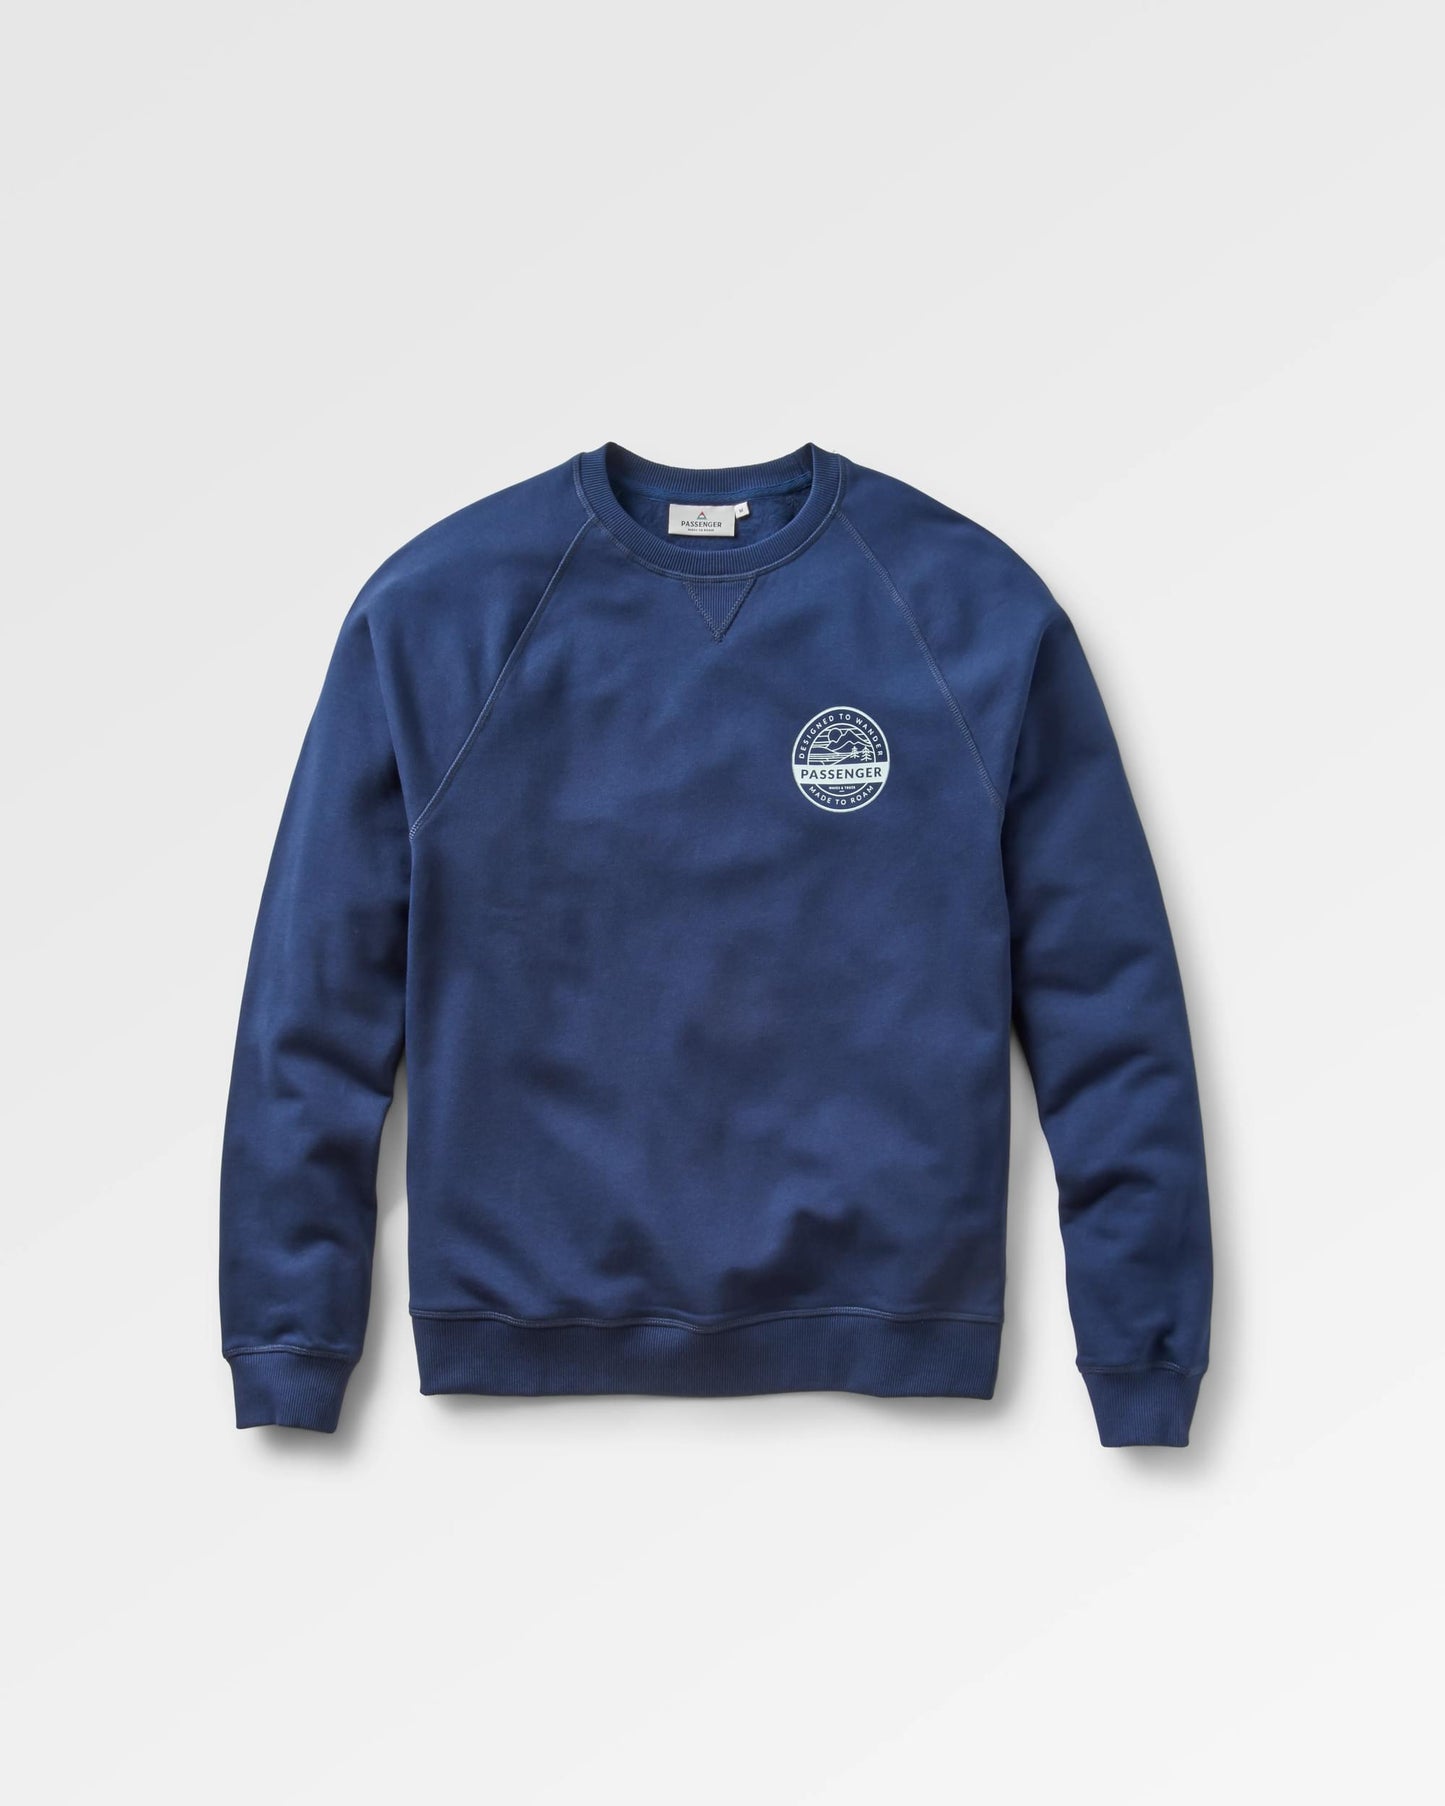 Odyssey Organic Cotton Sweatshirt - Rich Navy